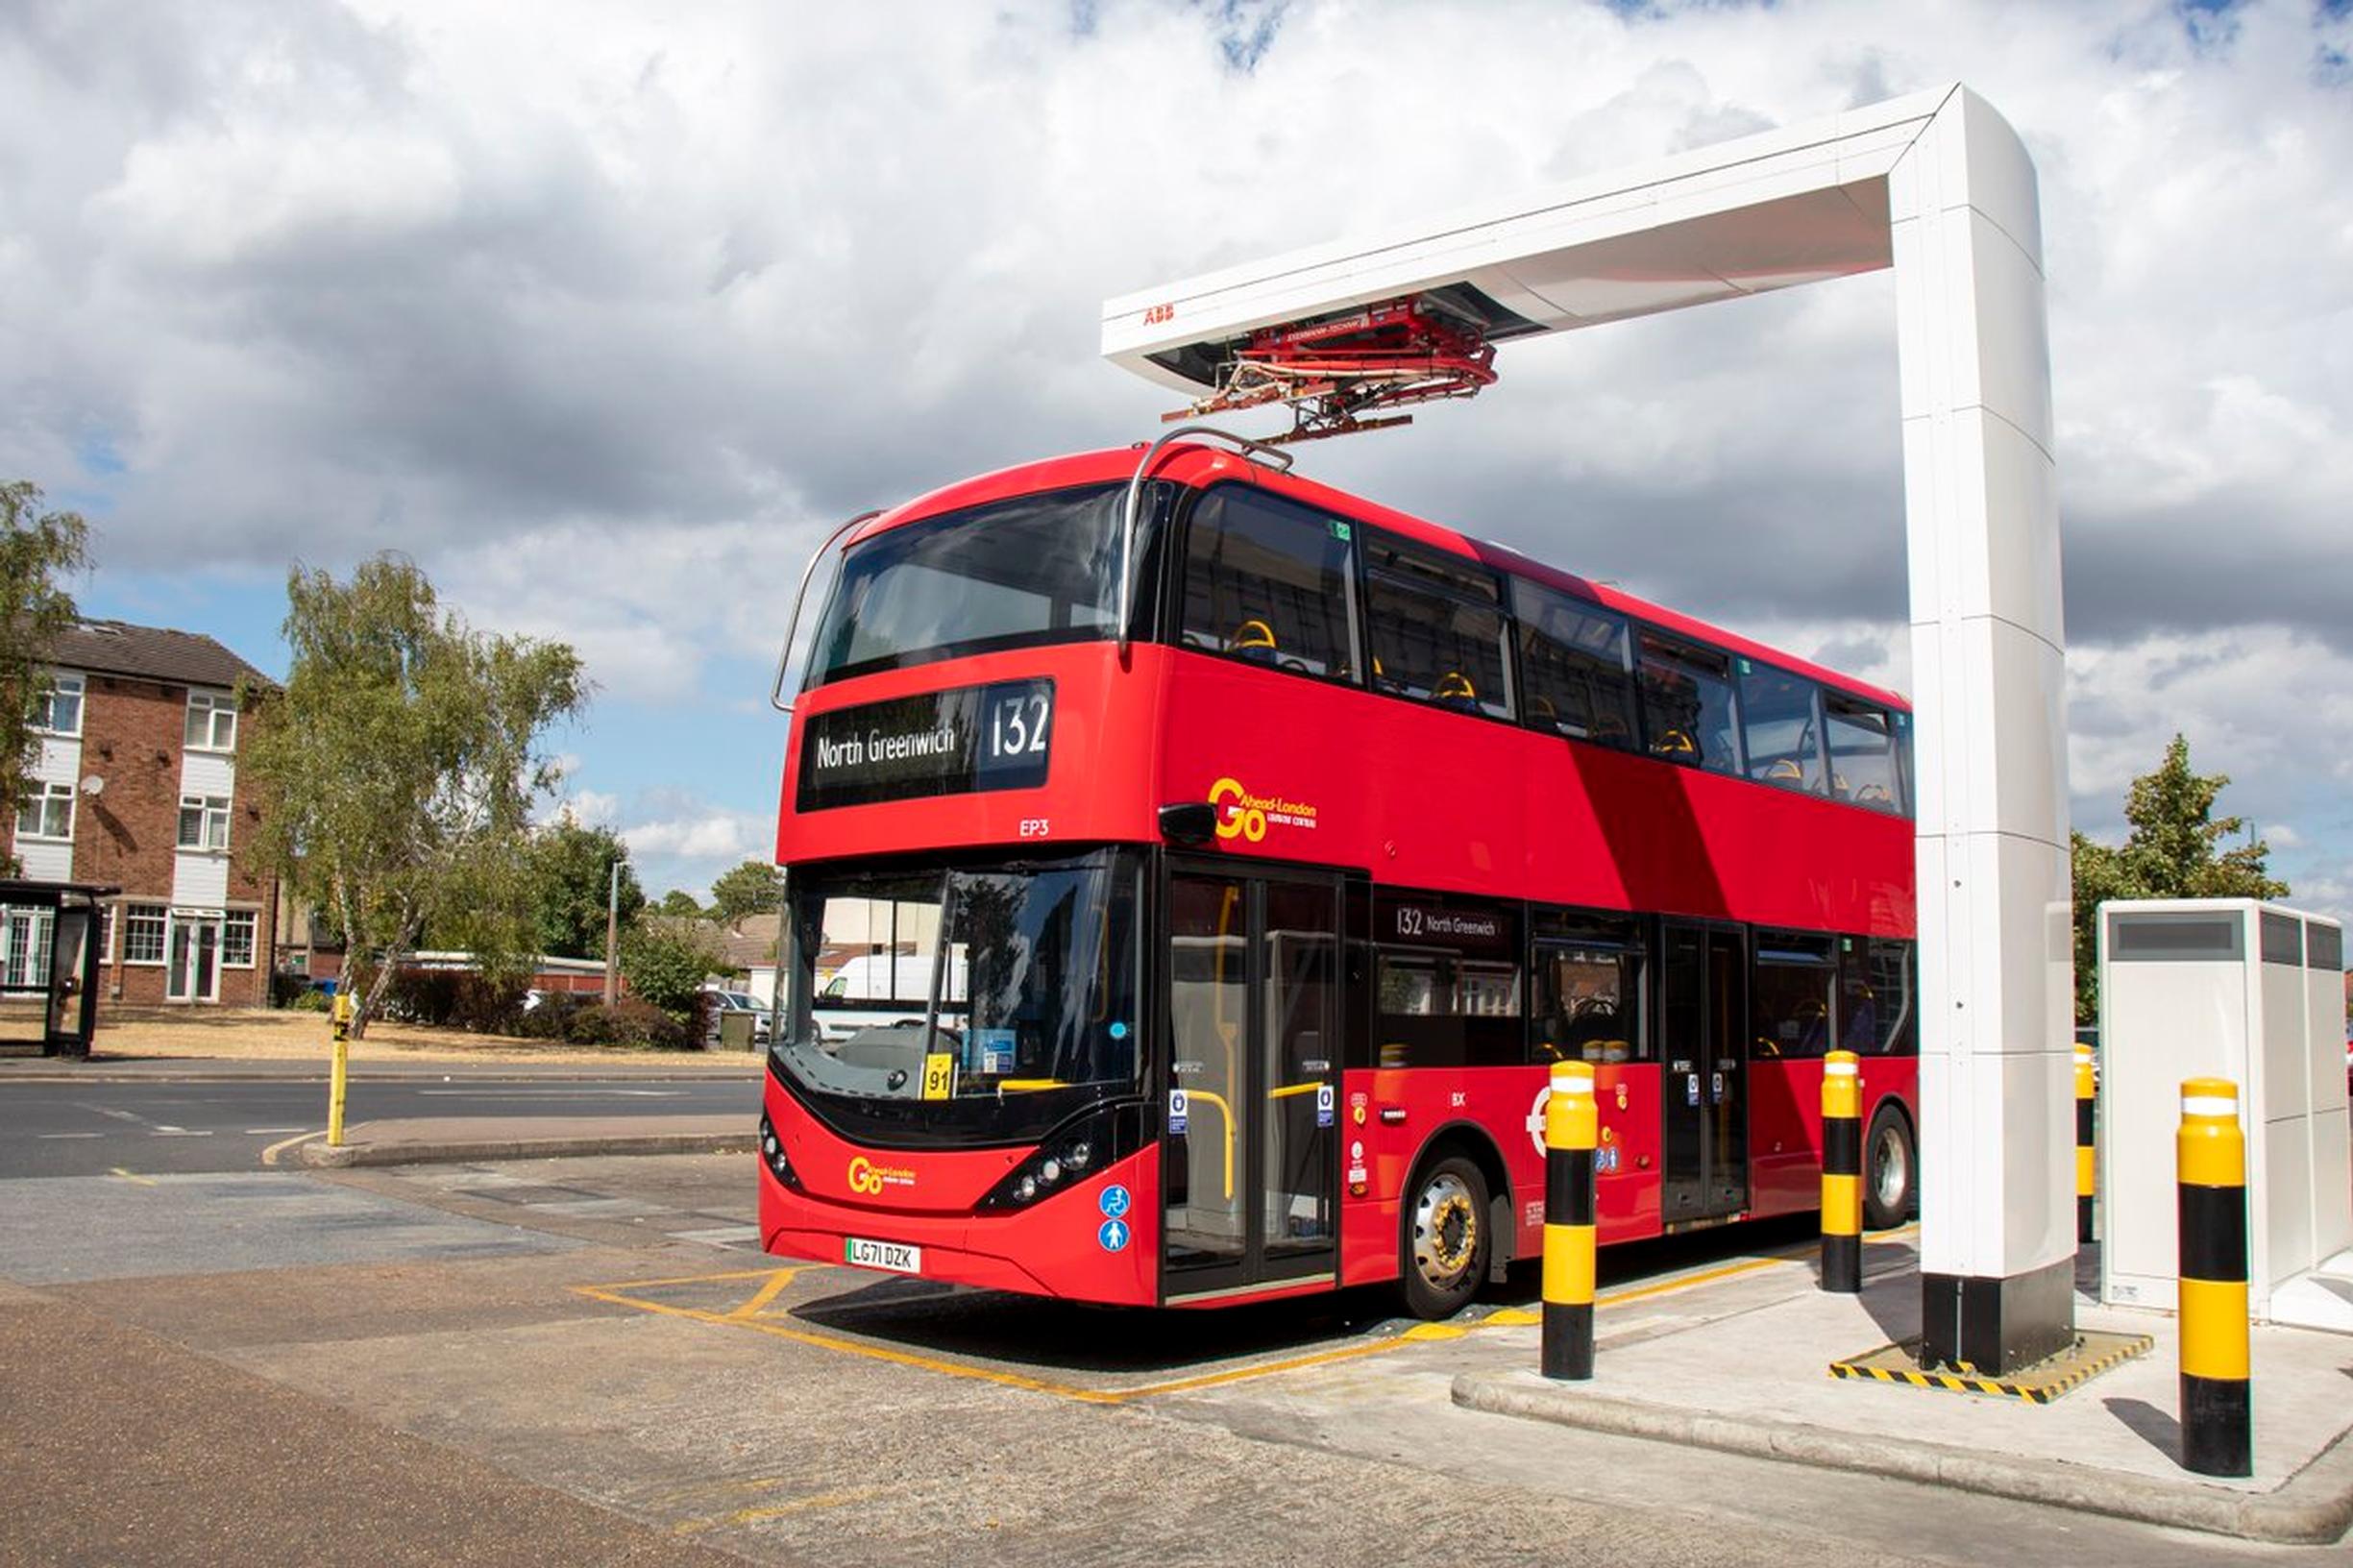 The ABB pantograph provides fast, high-power top-ups at Bexleyheath bus garage